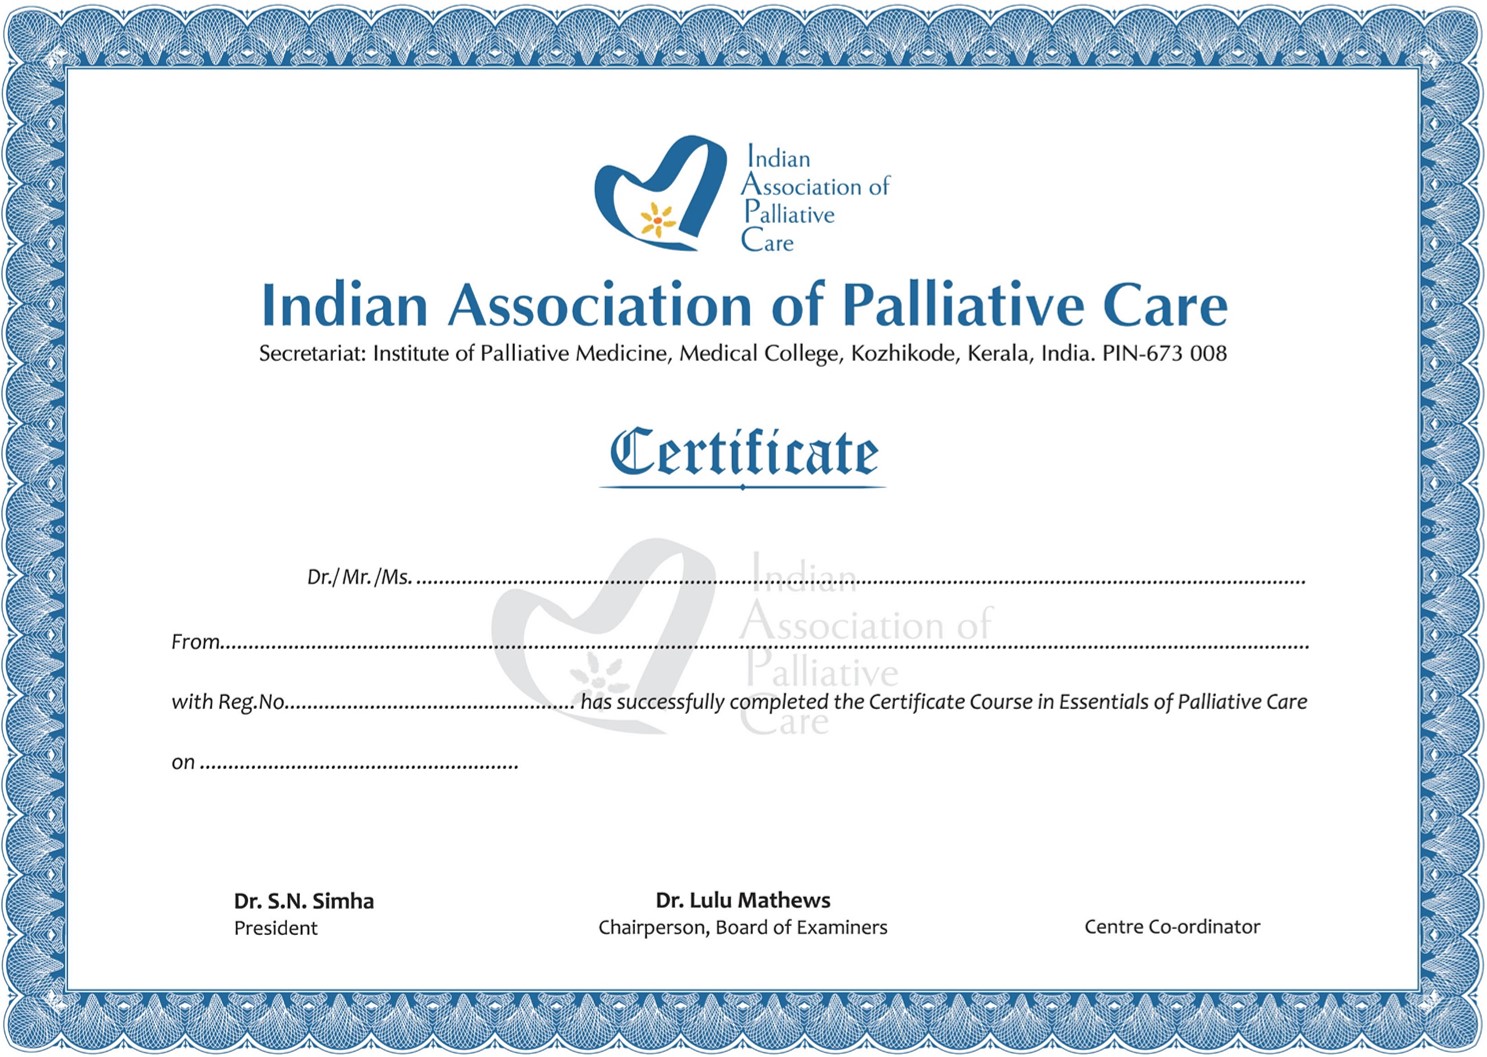 Blank IAPC certificate , results of June 2014 certificate course